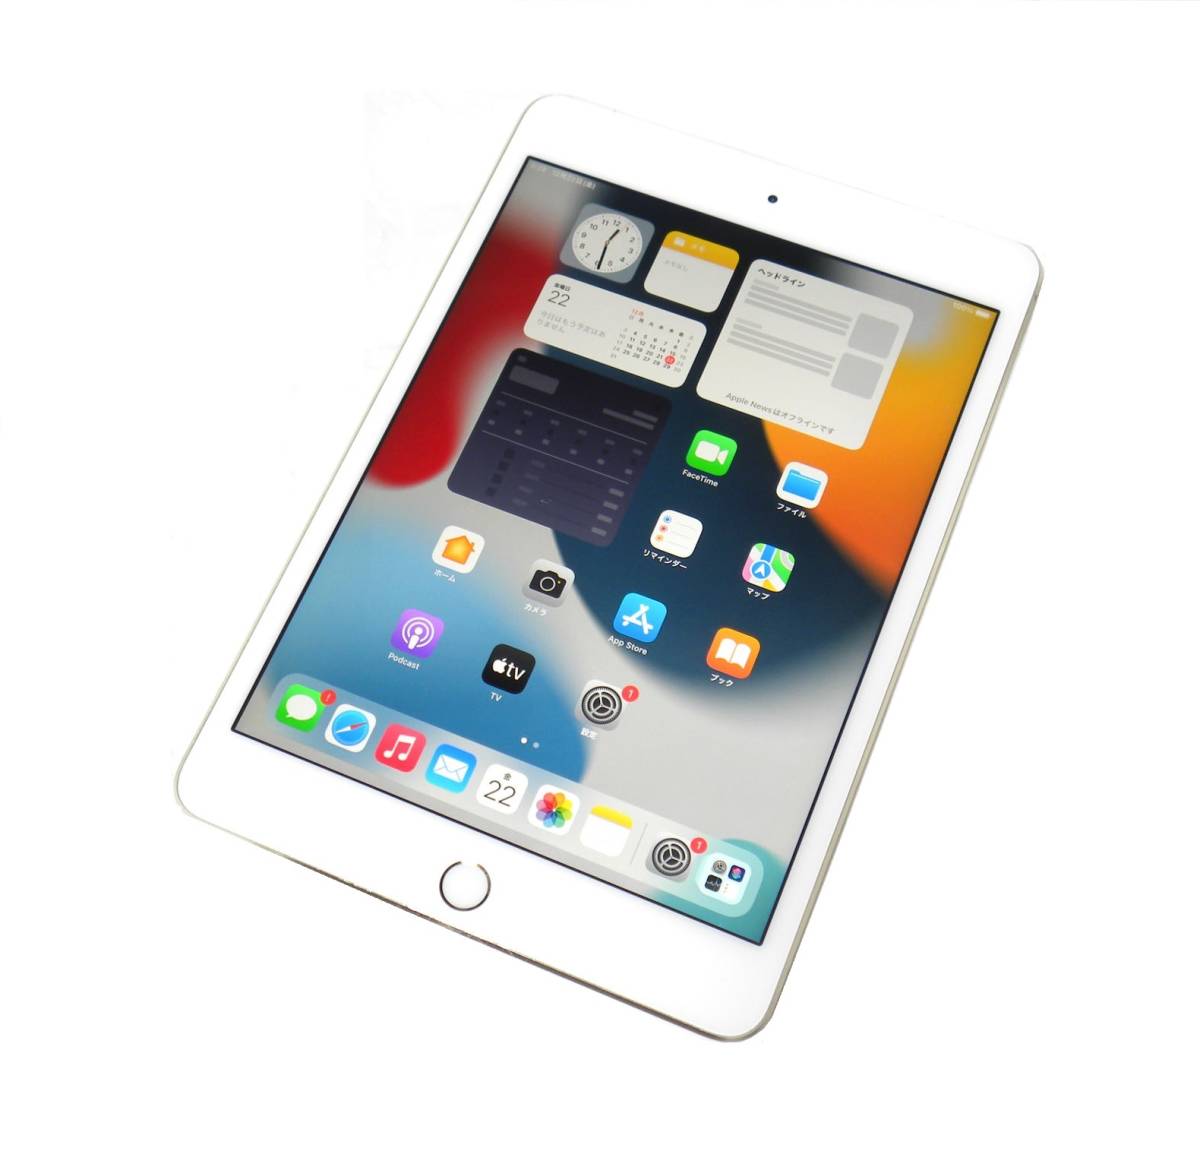 ☆Apple au iPad mini4 Cellular 16GB ゴールド MK712J/A SIMロック解除済み 利用制限「〇」 中古品☆_画像1